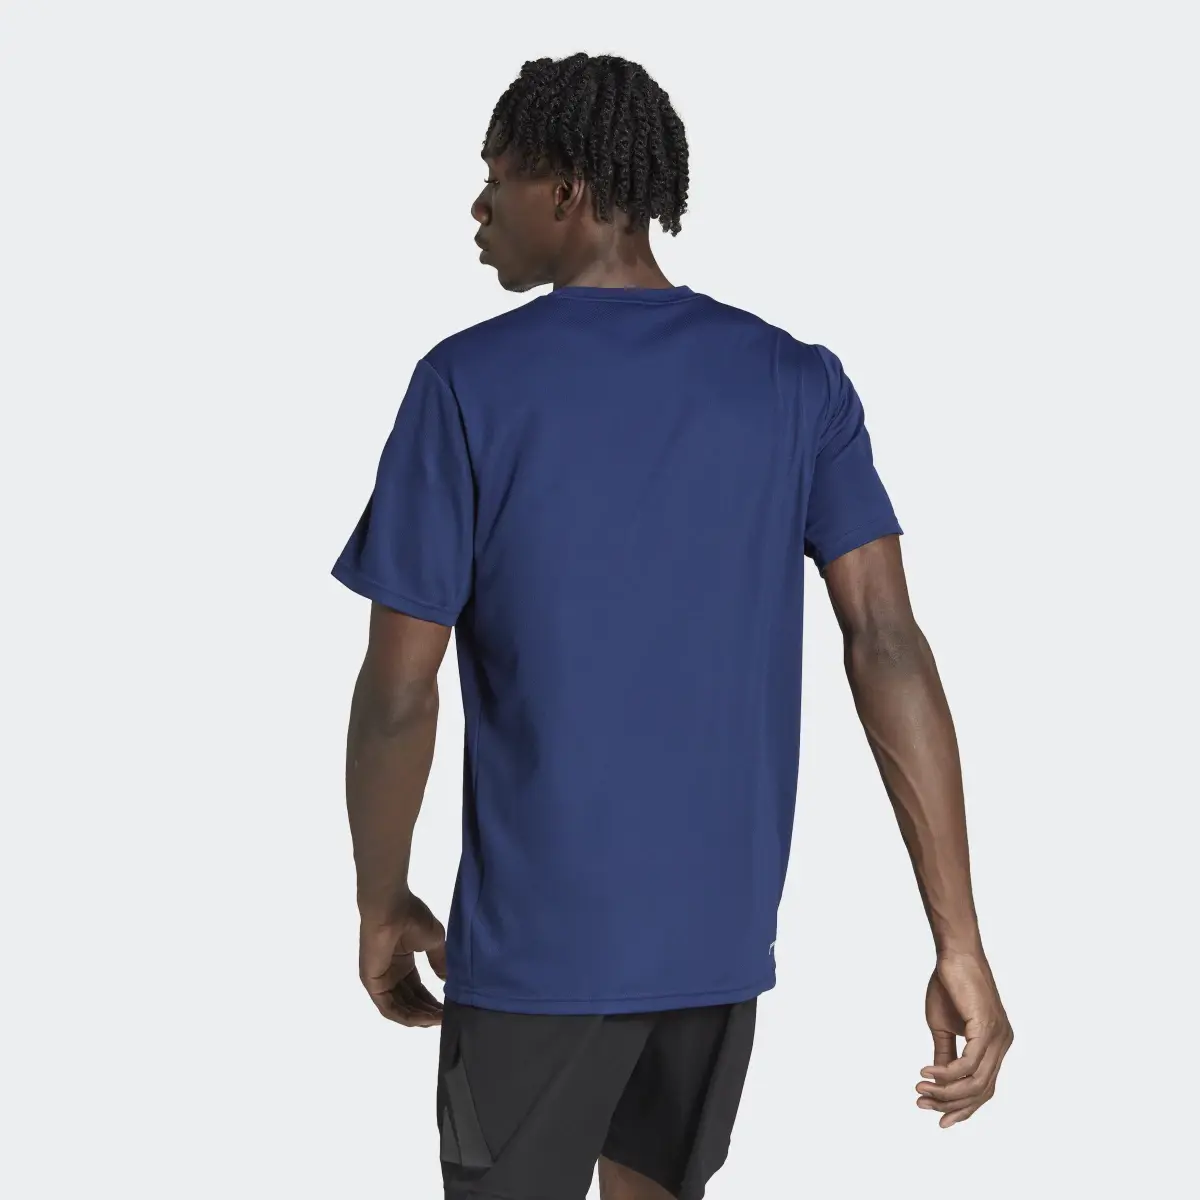 Adidas Train Essentials 3-Stripes Training T-Shirt. 3